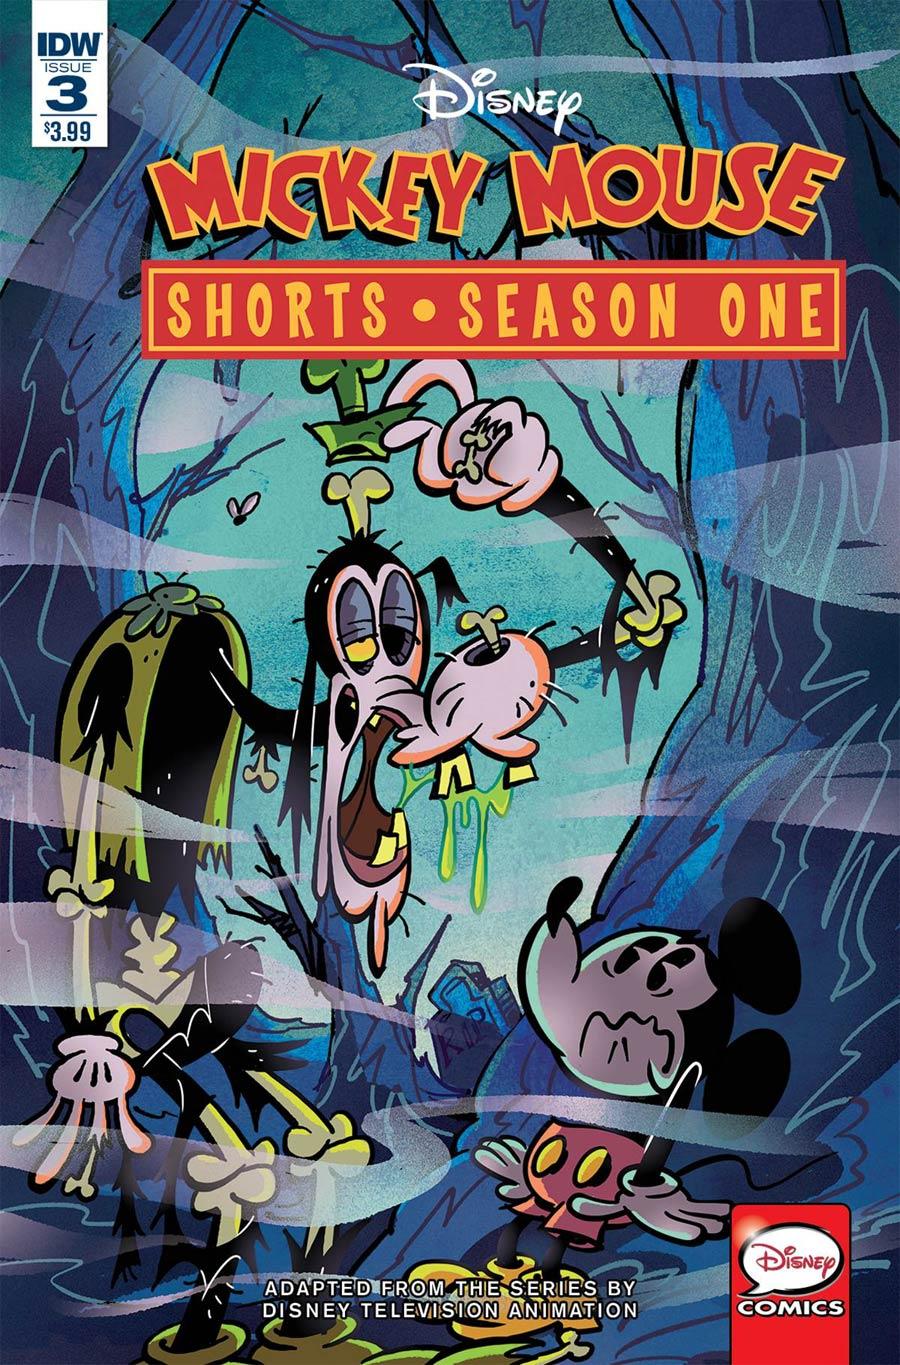 Mickey Mouse Shorts Season 1 Vol. 1 #3